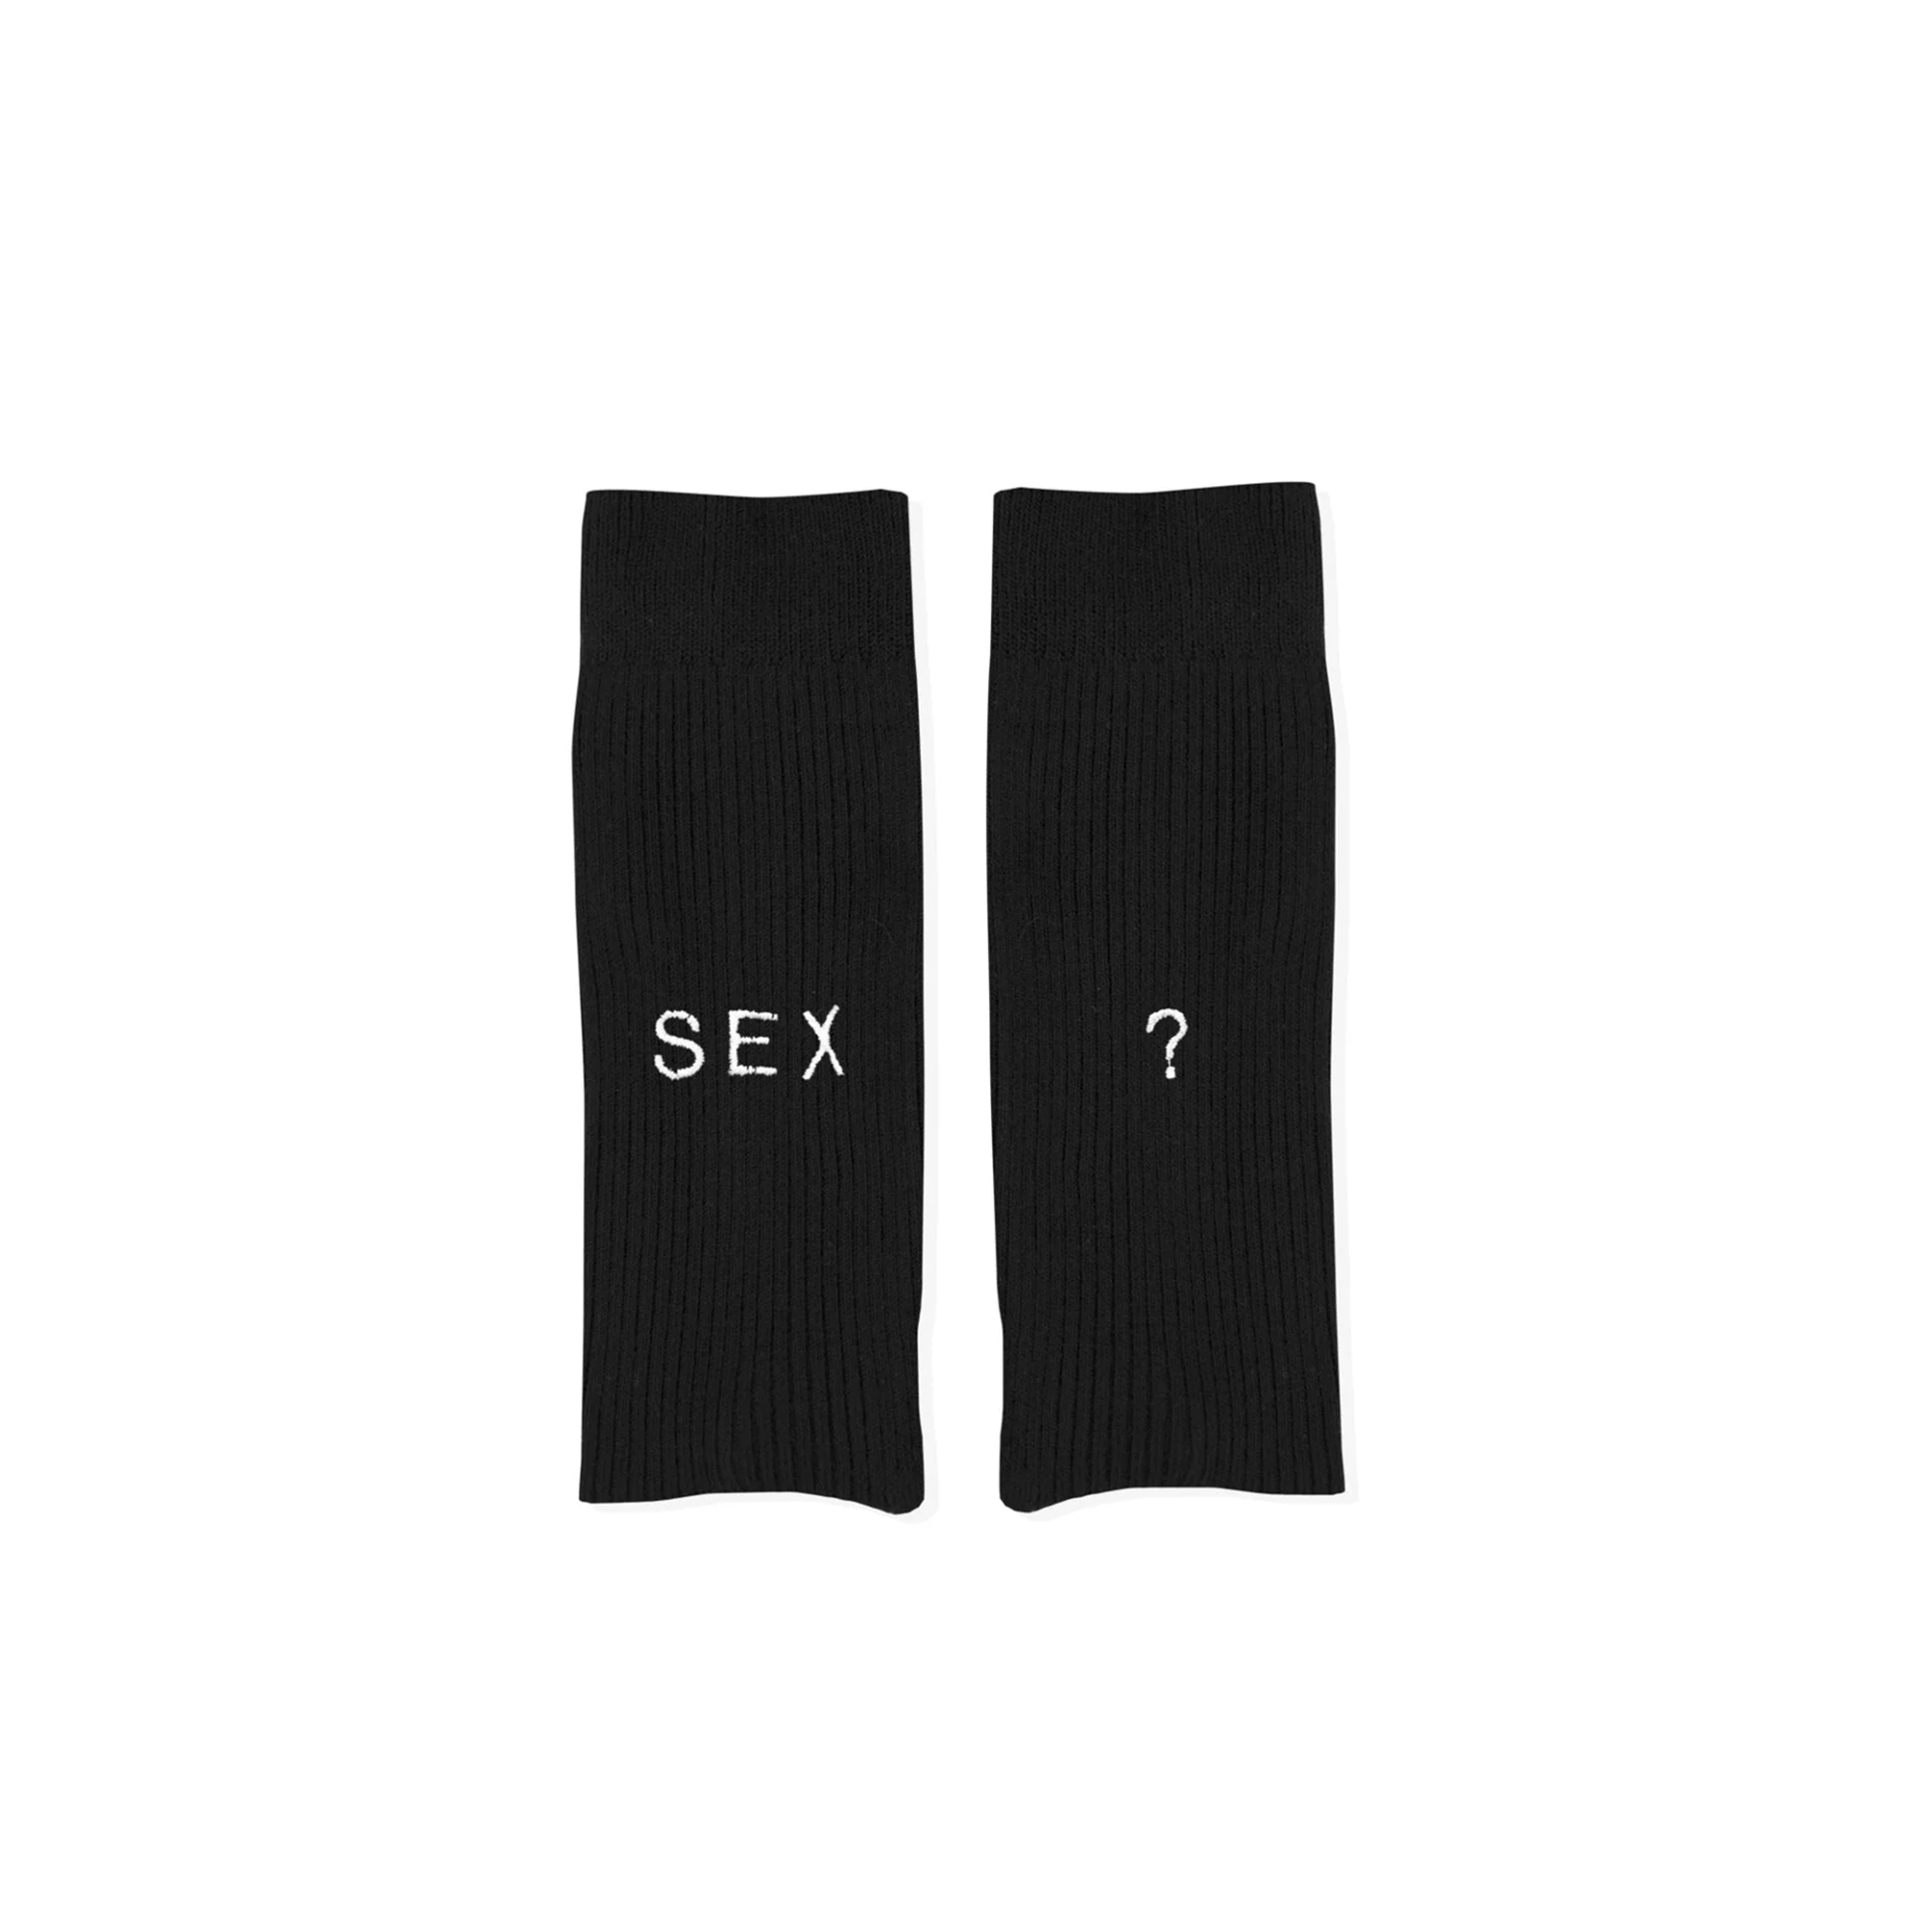 Sex? (Black)